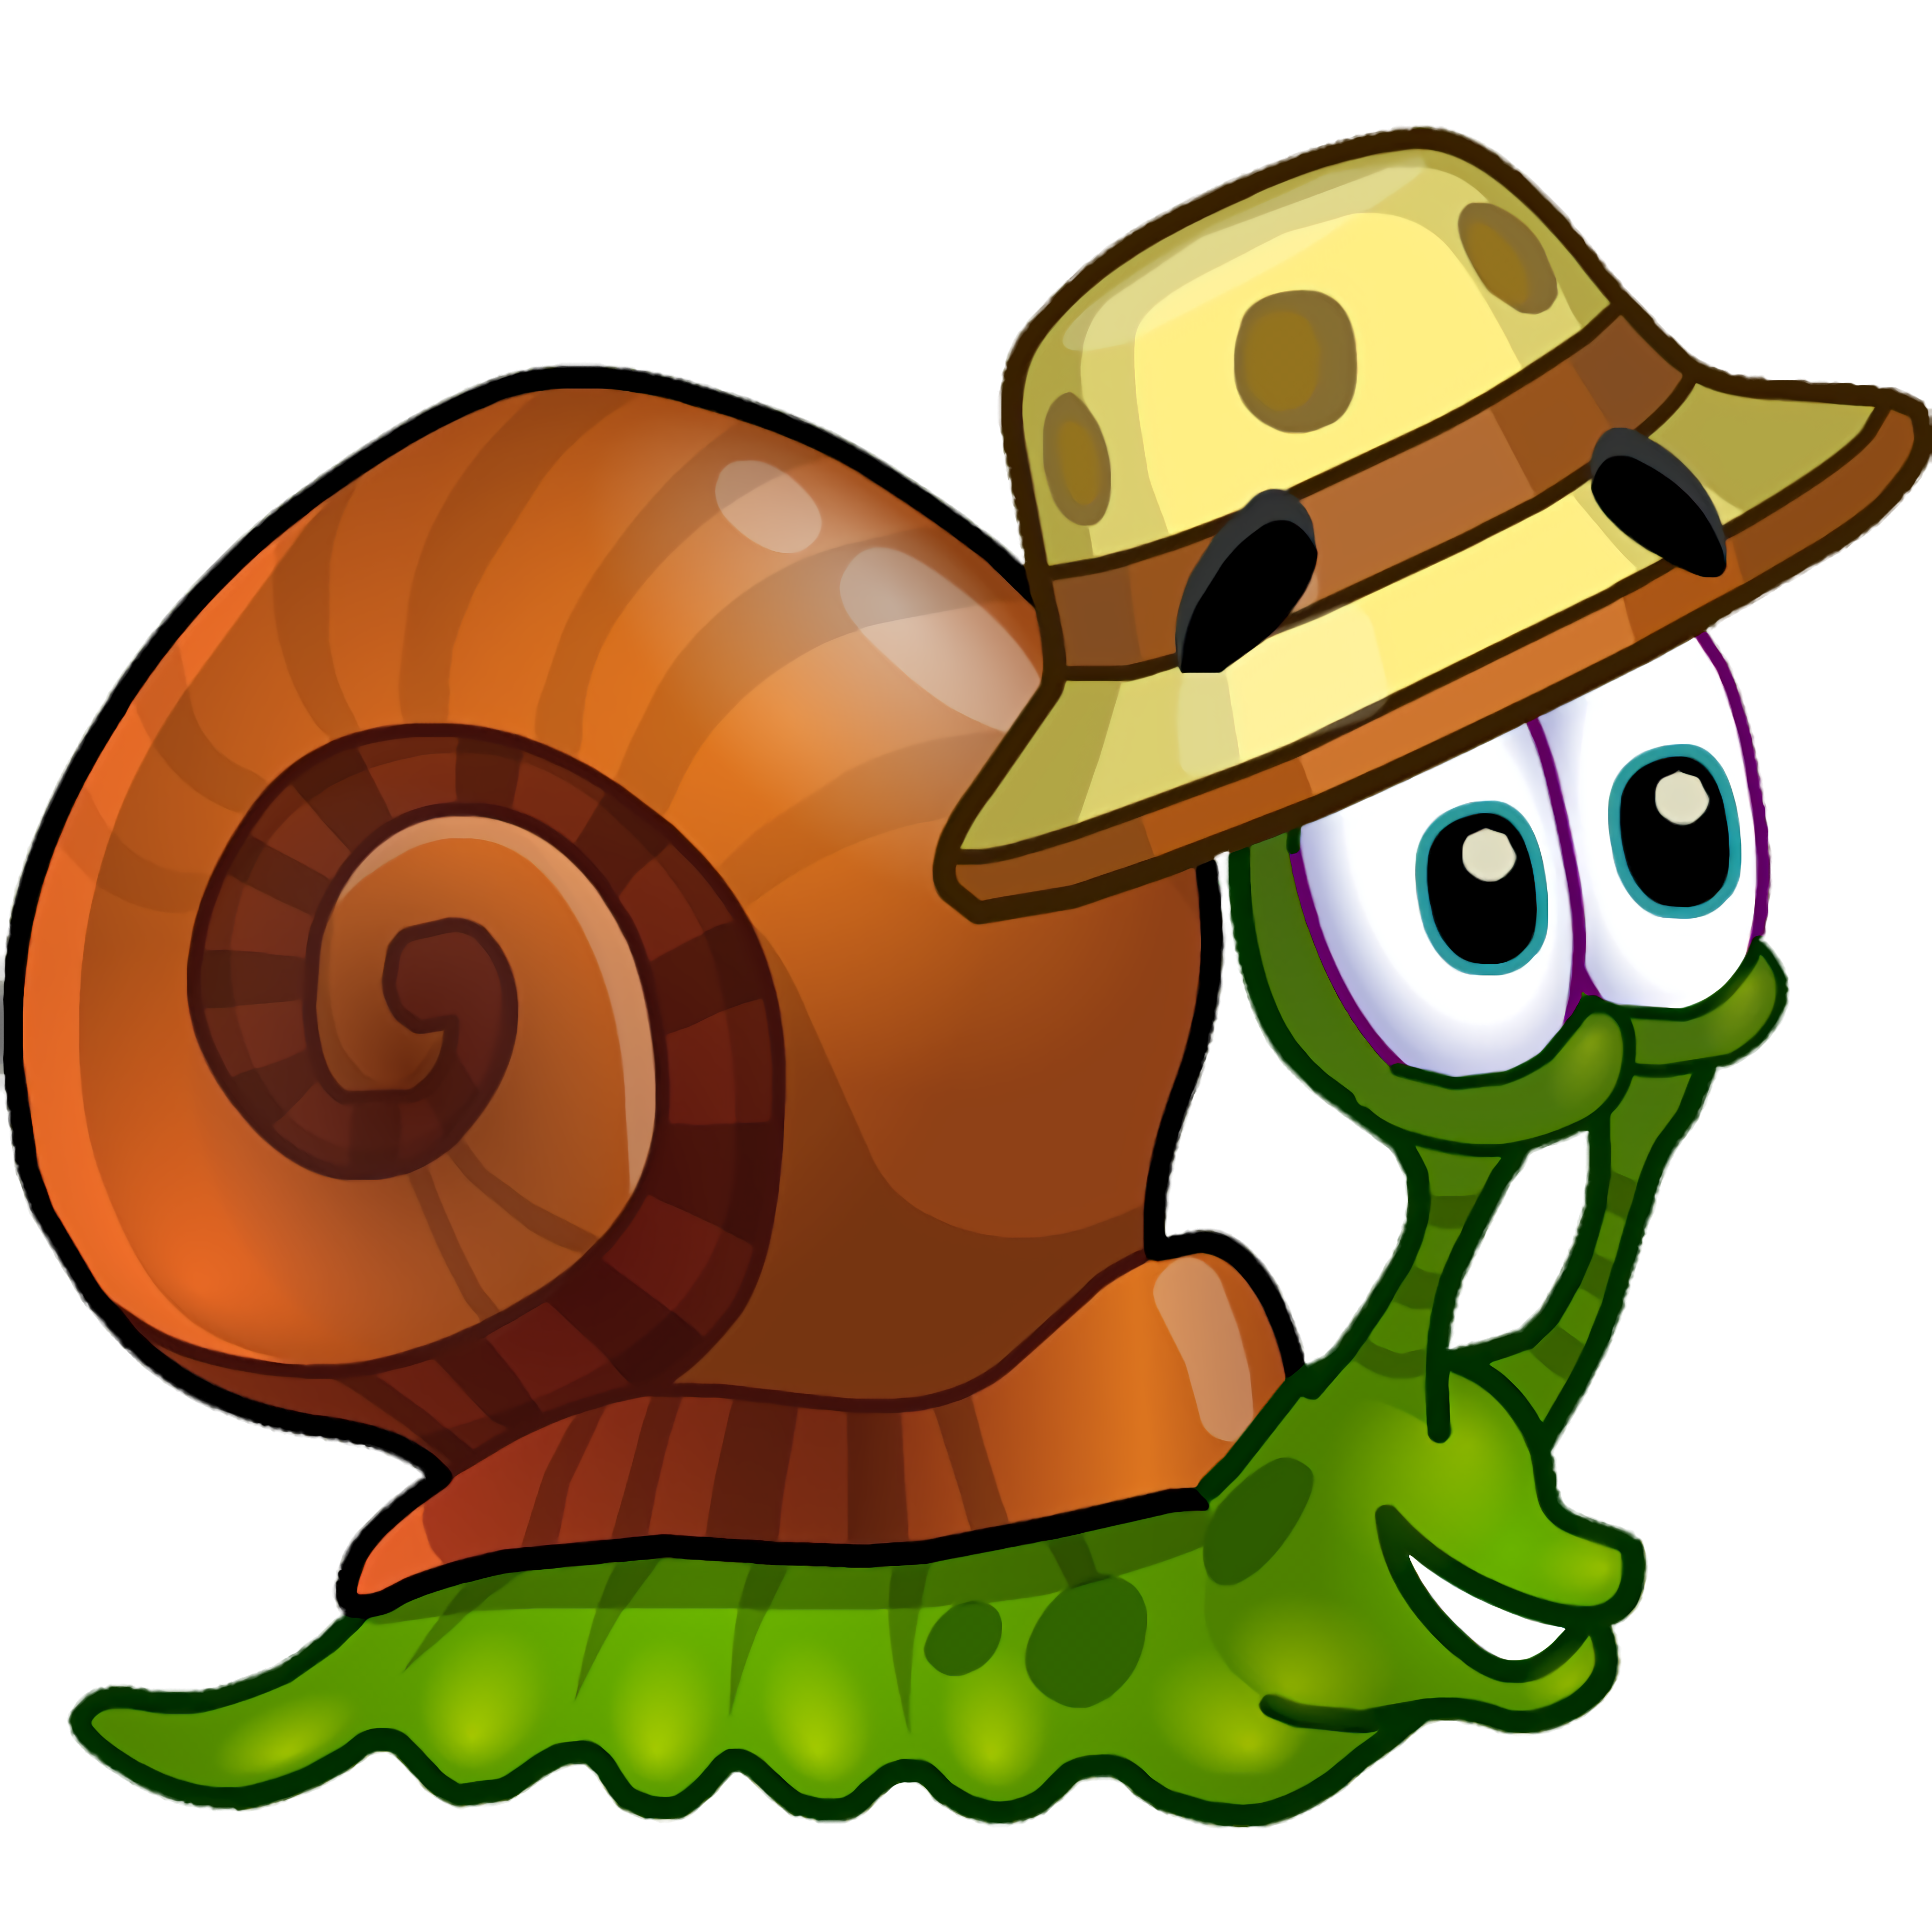 Улитка Боб 3 (Snail Bob 3). Снаил Боб. Snail Bob 2 (улитка Боб 2). Snail Bob (улитка Боб) 6. Улитка 3 часть